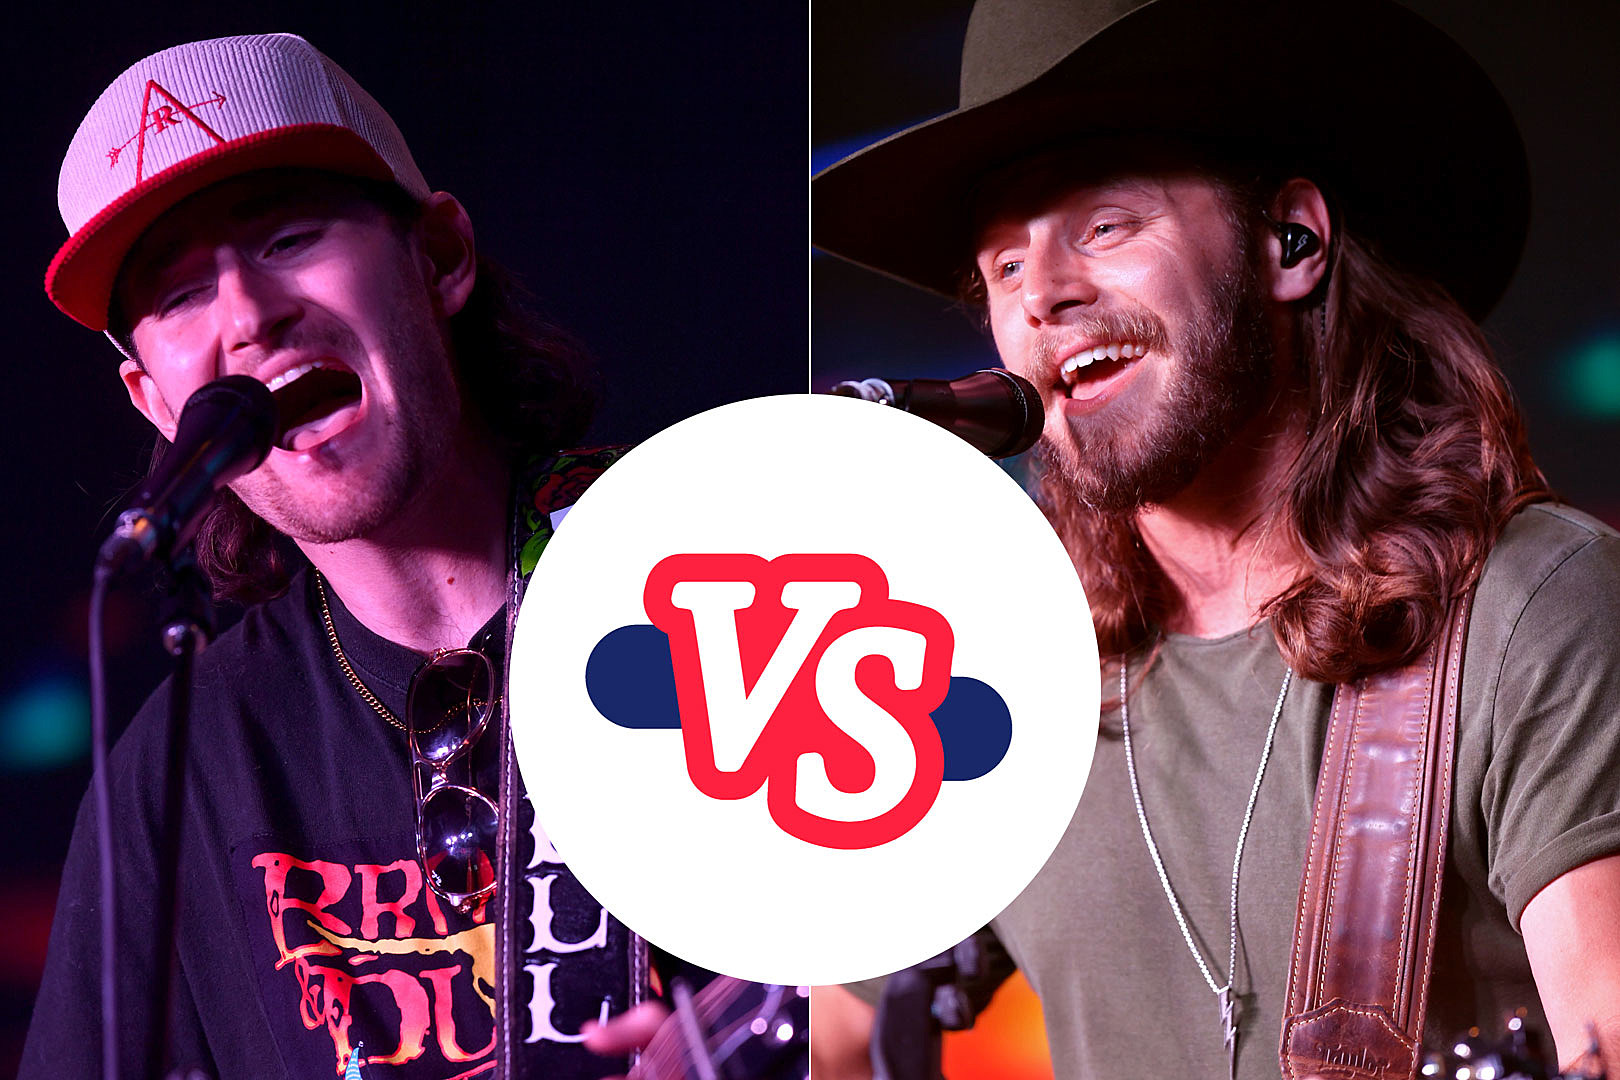 Better Country Rock Song - Austin Snell vs. Warren Zeiders?